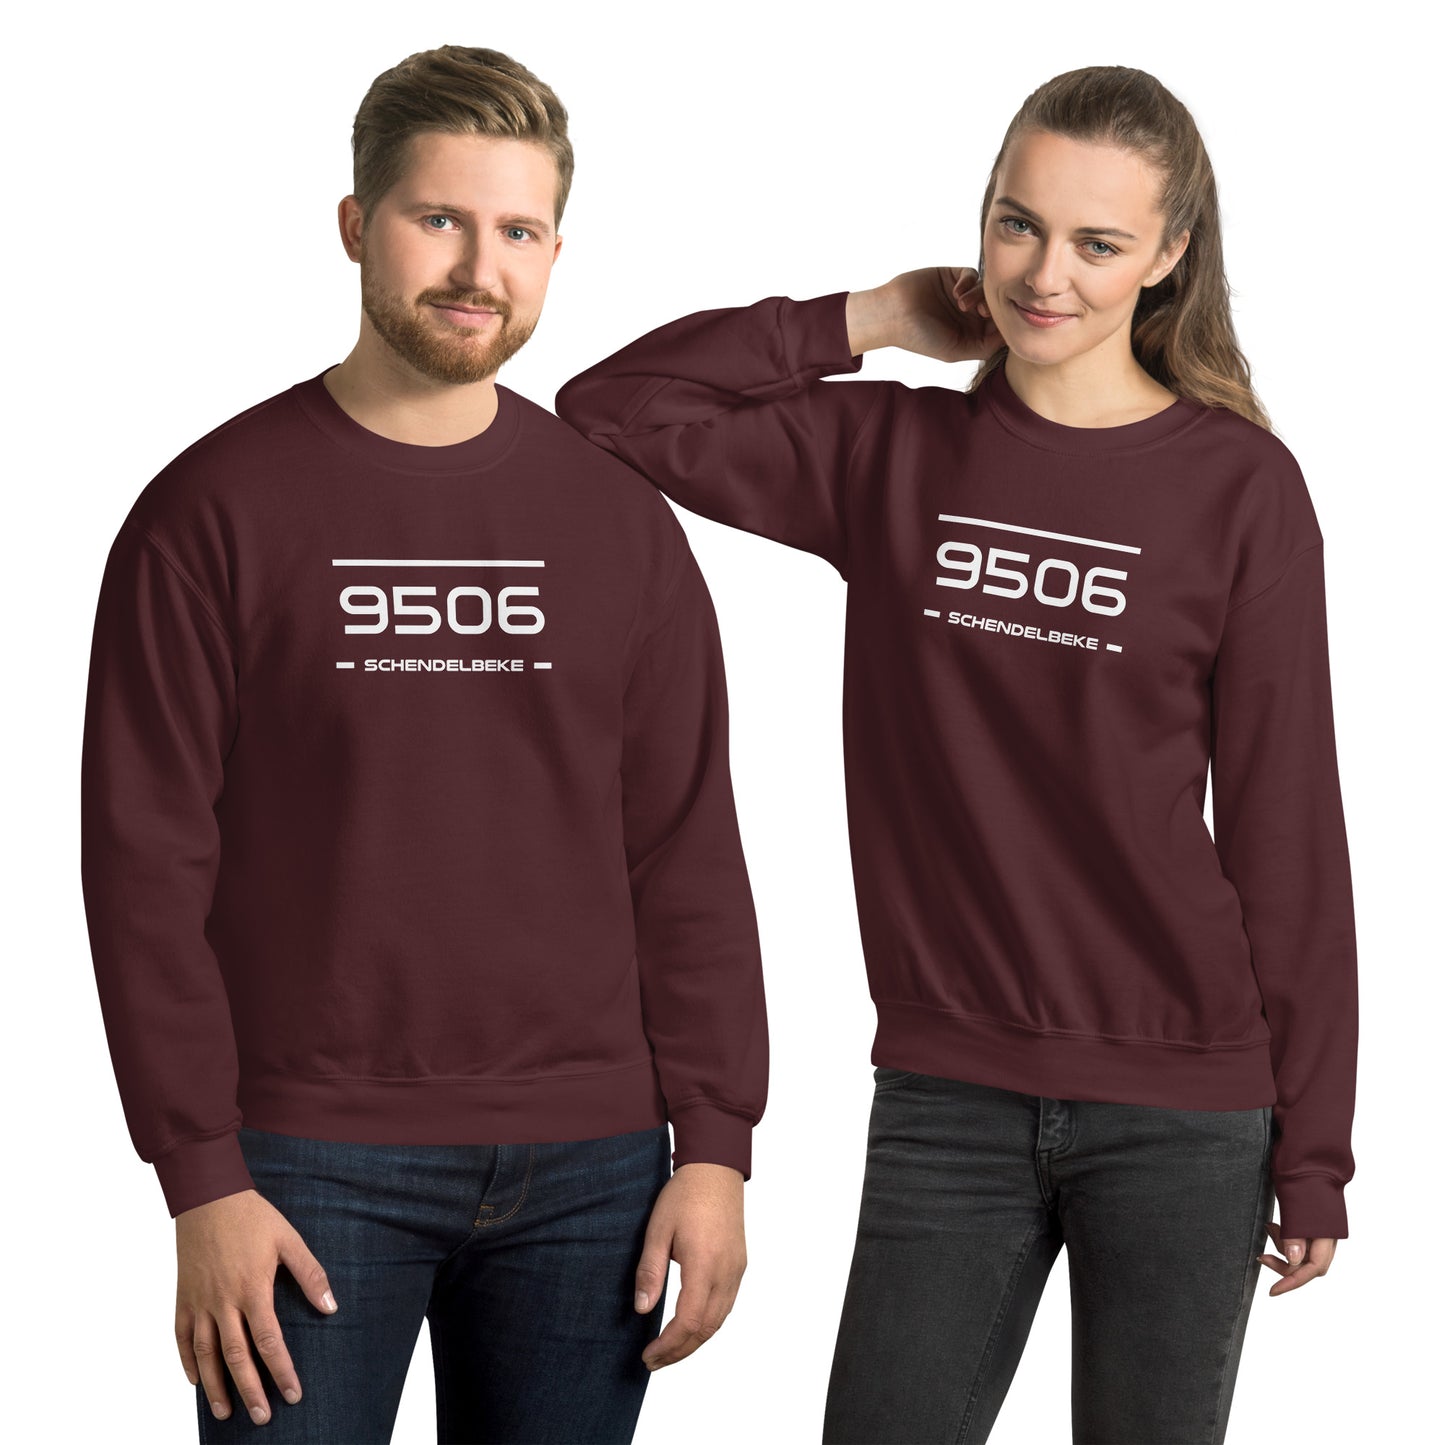 Sweater - 9506 - Schendelbeke (M/V)